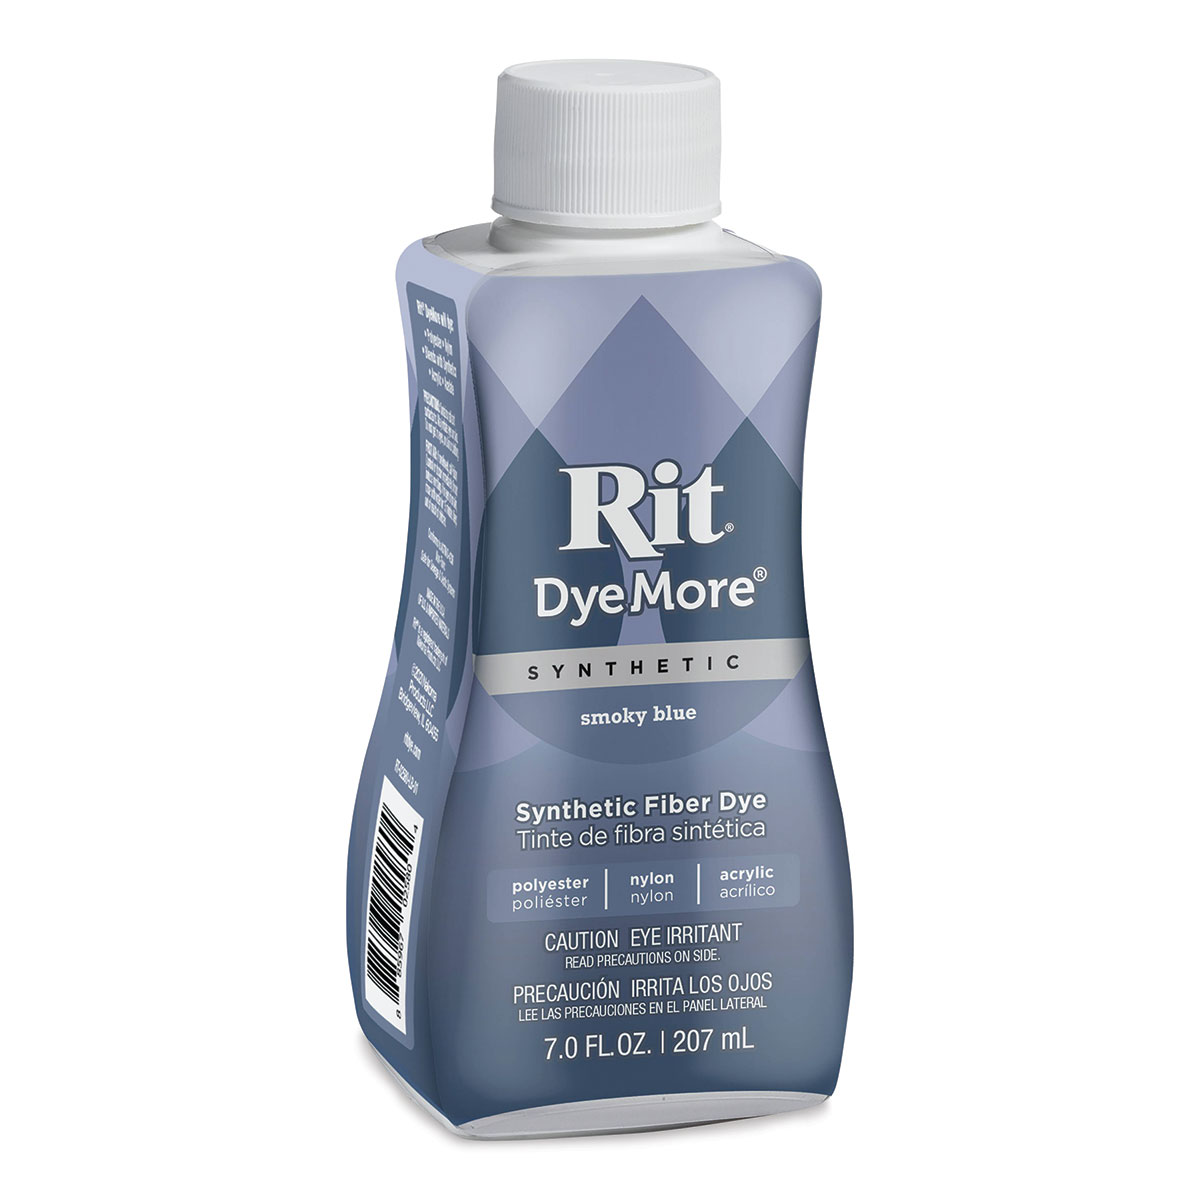 RIT DYEMORE Synthetic Fiber Dye for Polyester, Nylon, Acrylic Dye 7oz  Bottles